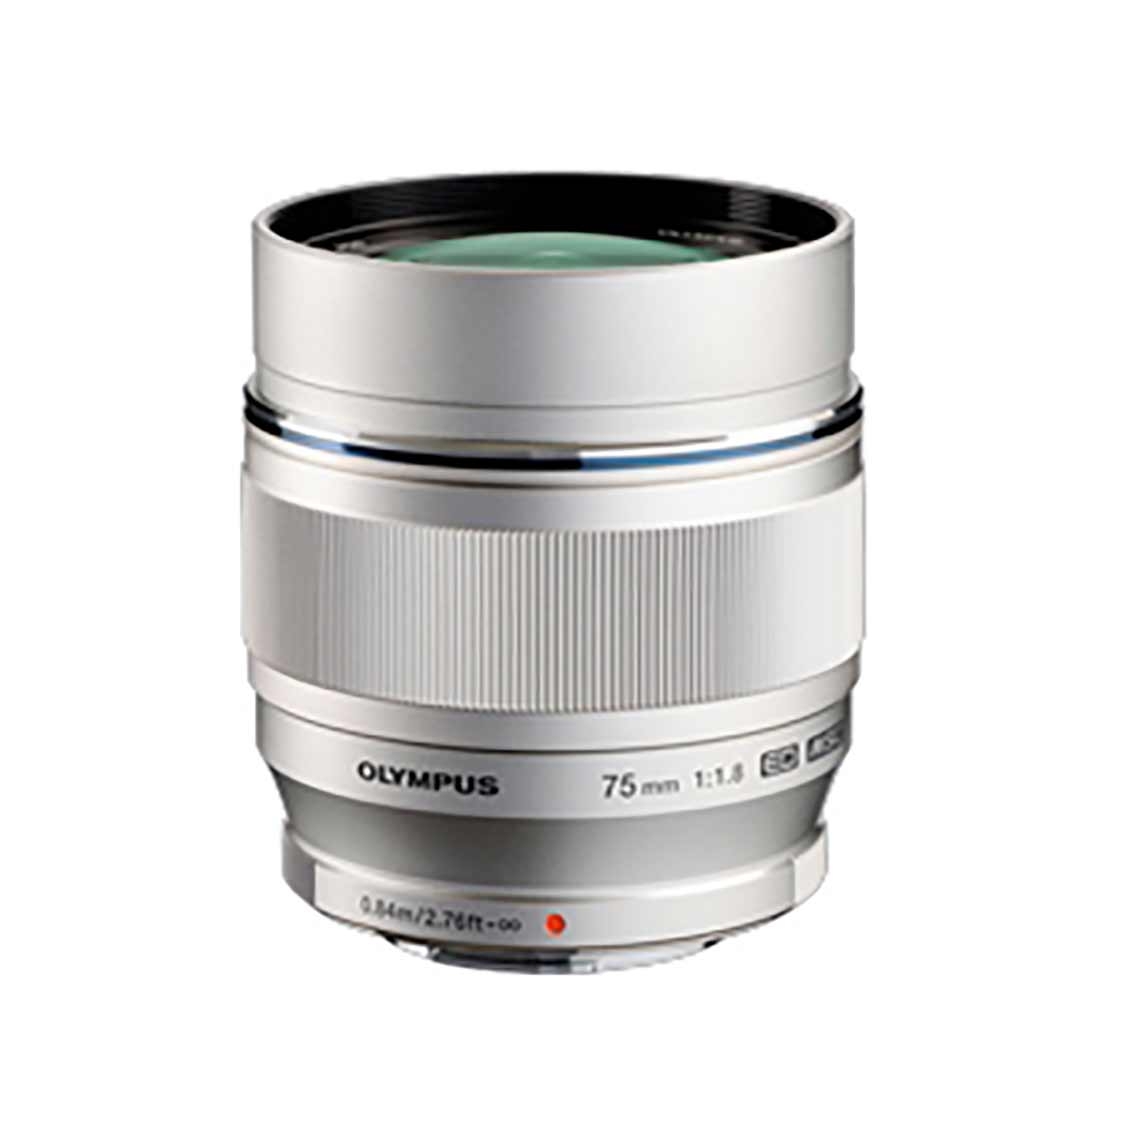 Olympus PEN MSC 75mm F1.8 Lens (silver)